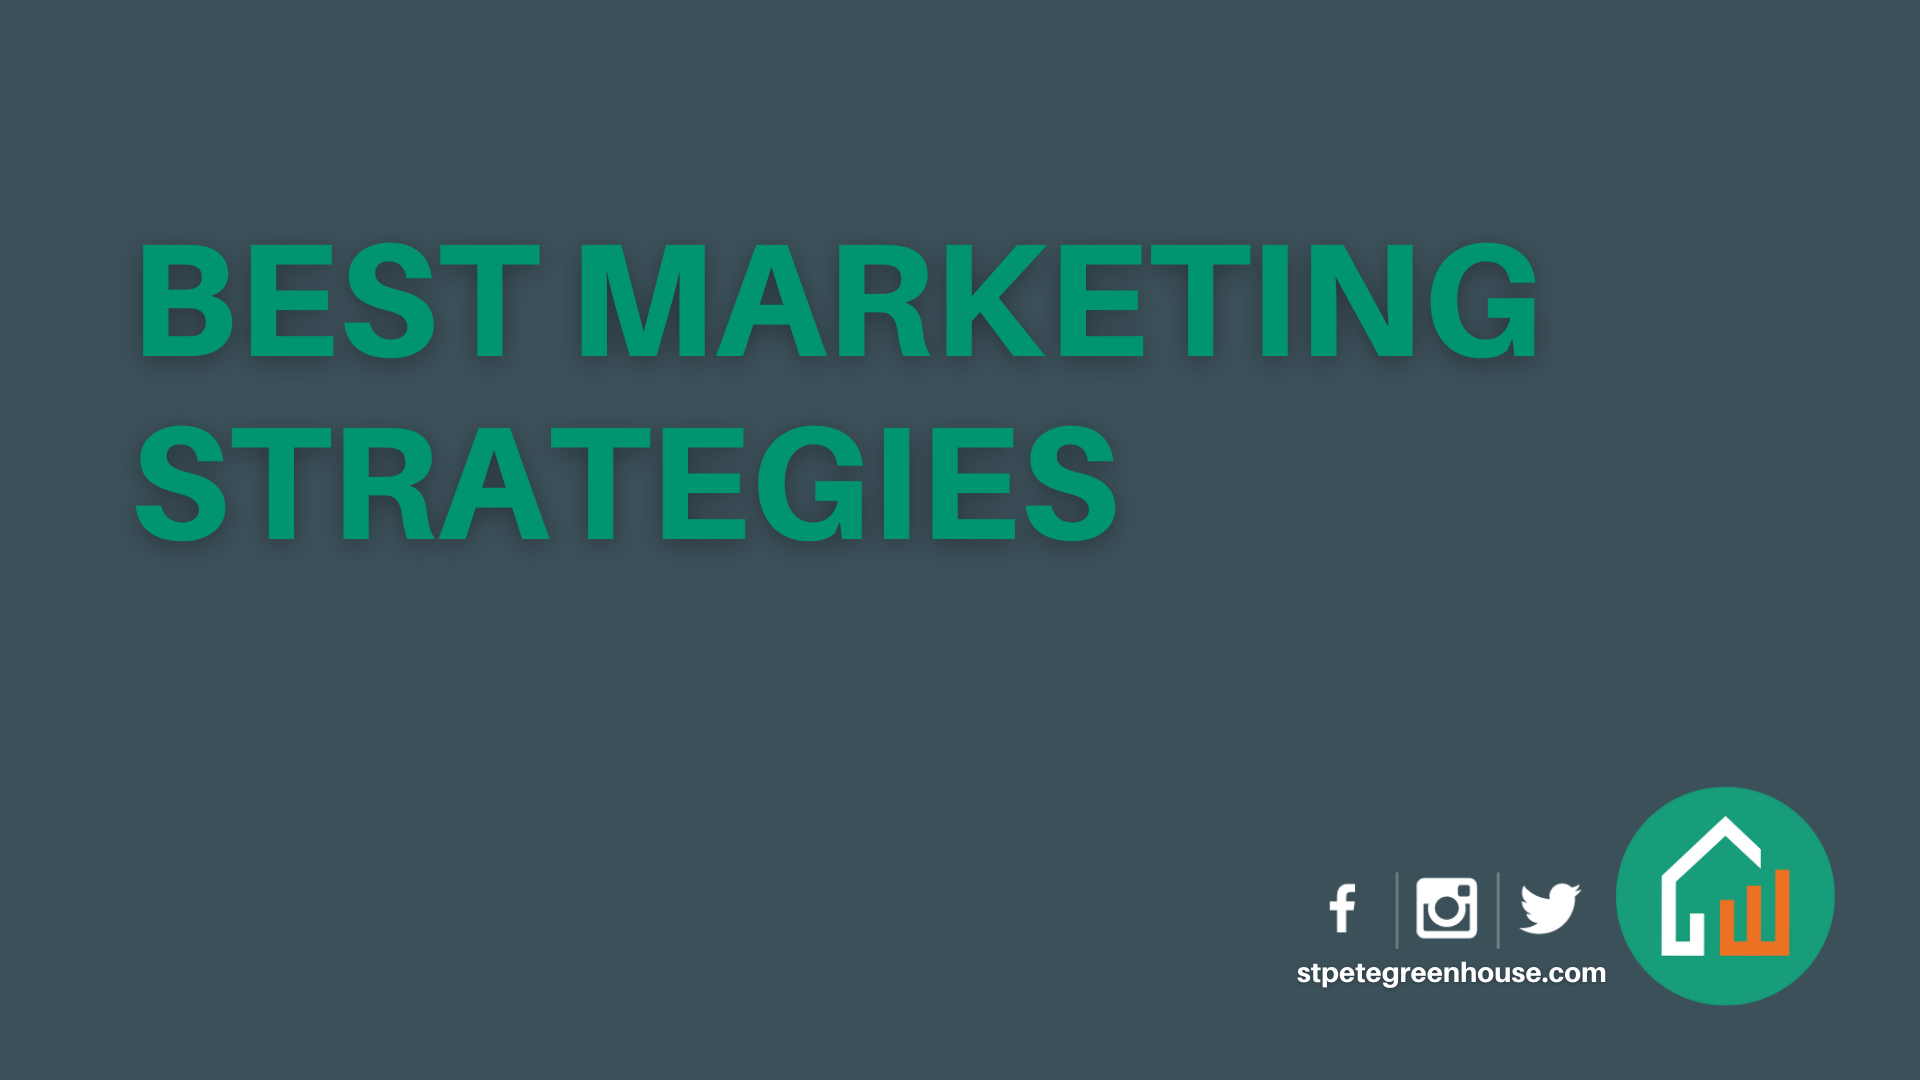 Best Marketing Strategies main image